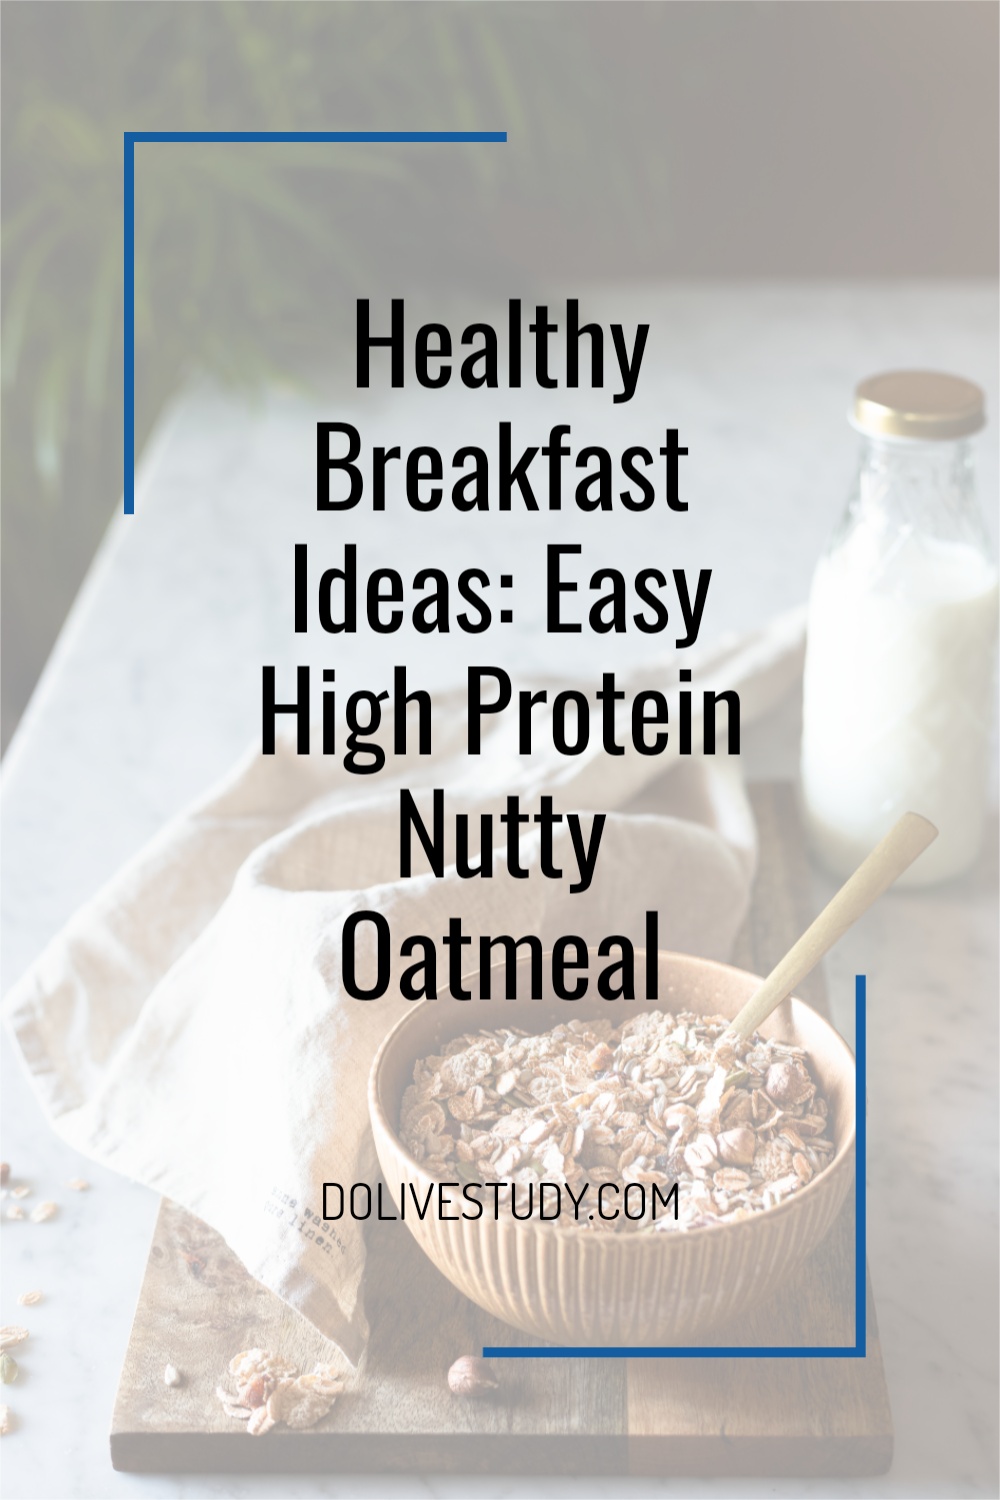 Healthy Breakfast Ideas  Easy High Protein Nutty Oatmeal4 - Healthy Breakfast Ideas: Easy High Protein Nutty Oatmeal